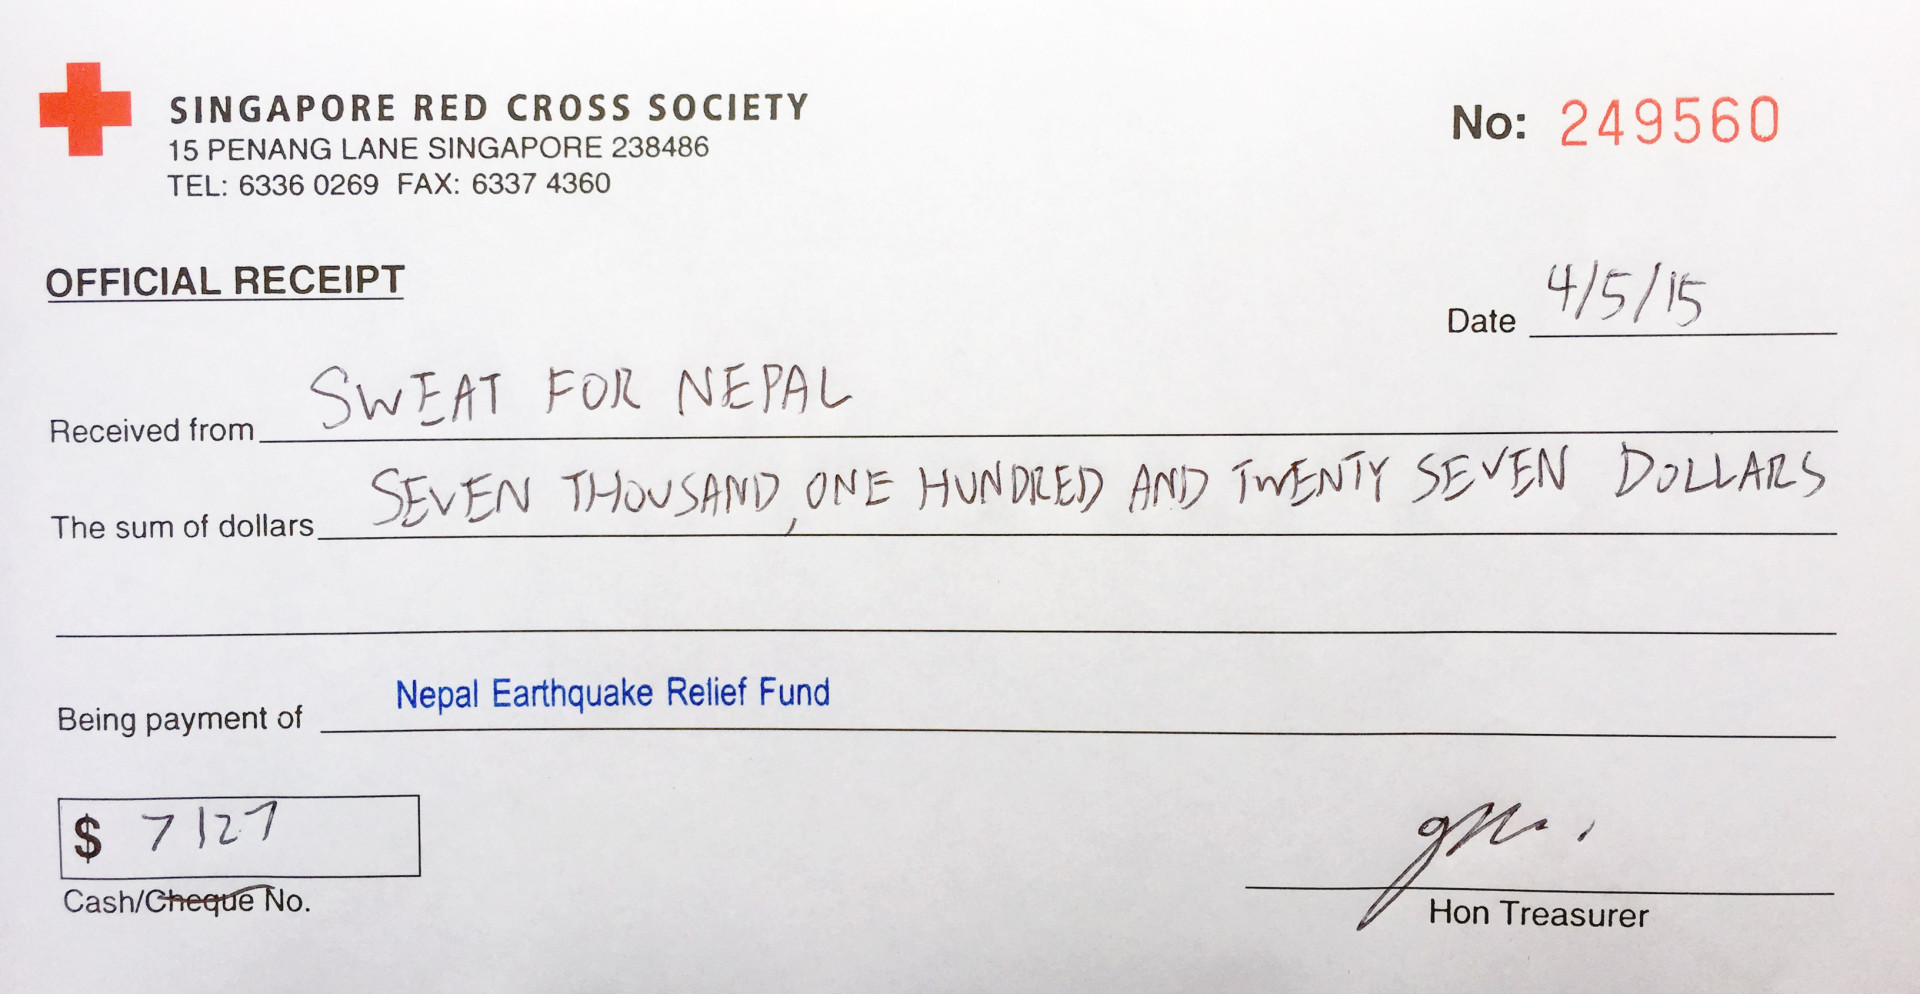 Sweatfornepal charity contribution to singapore red cross society receipt